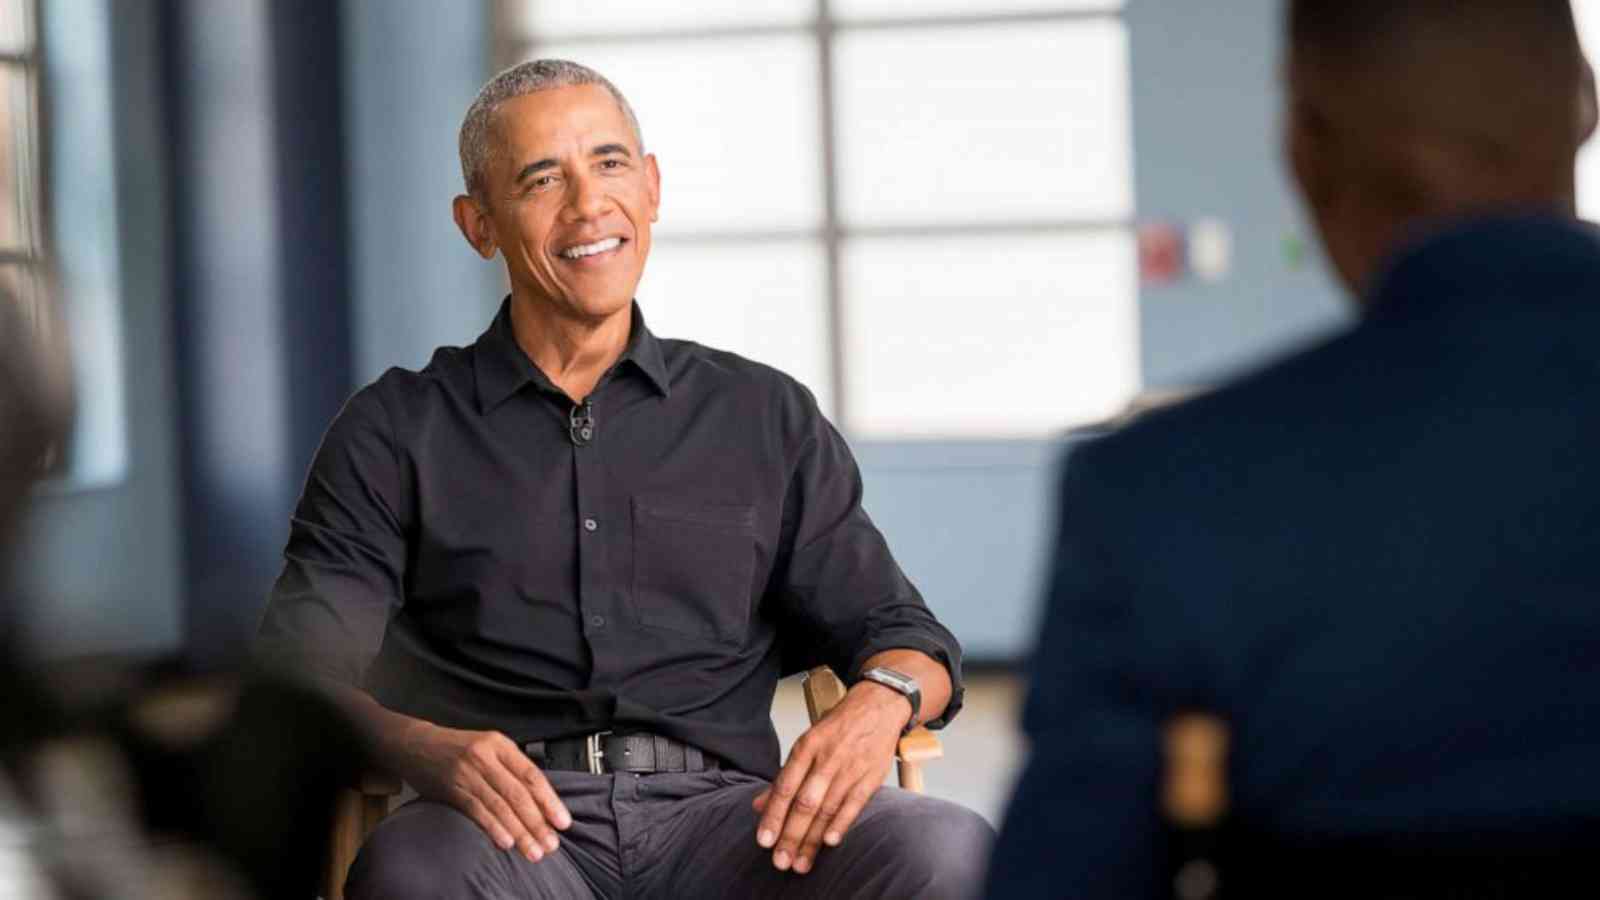 Barack Obama Birthday: Early Life, Political Career, Post-Presidential Life